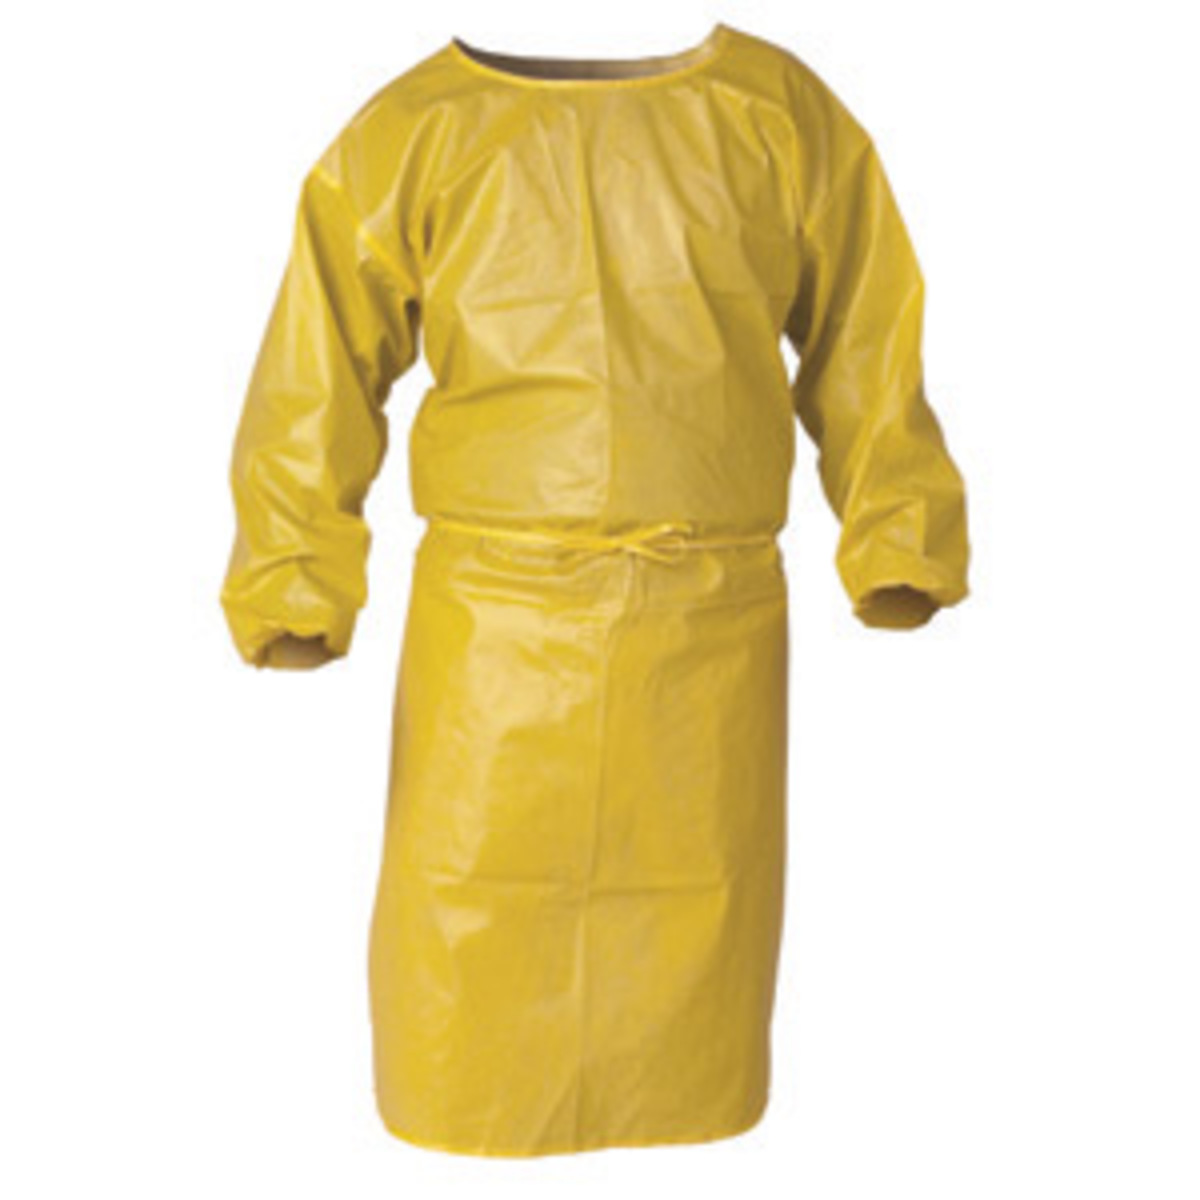 Kimberly-Clark Professional* Yellow KleenGuard* A70 1.5 mil Polypropylene Smock (Availability restrictions apply.)